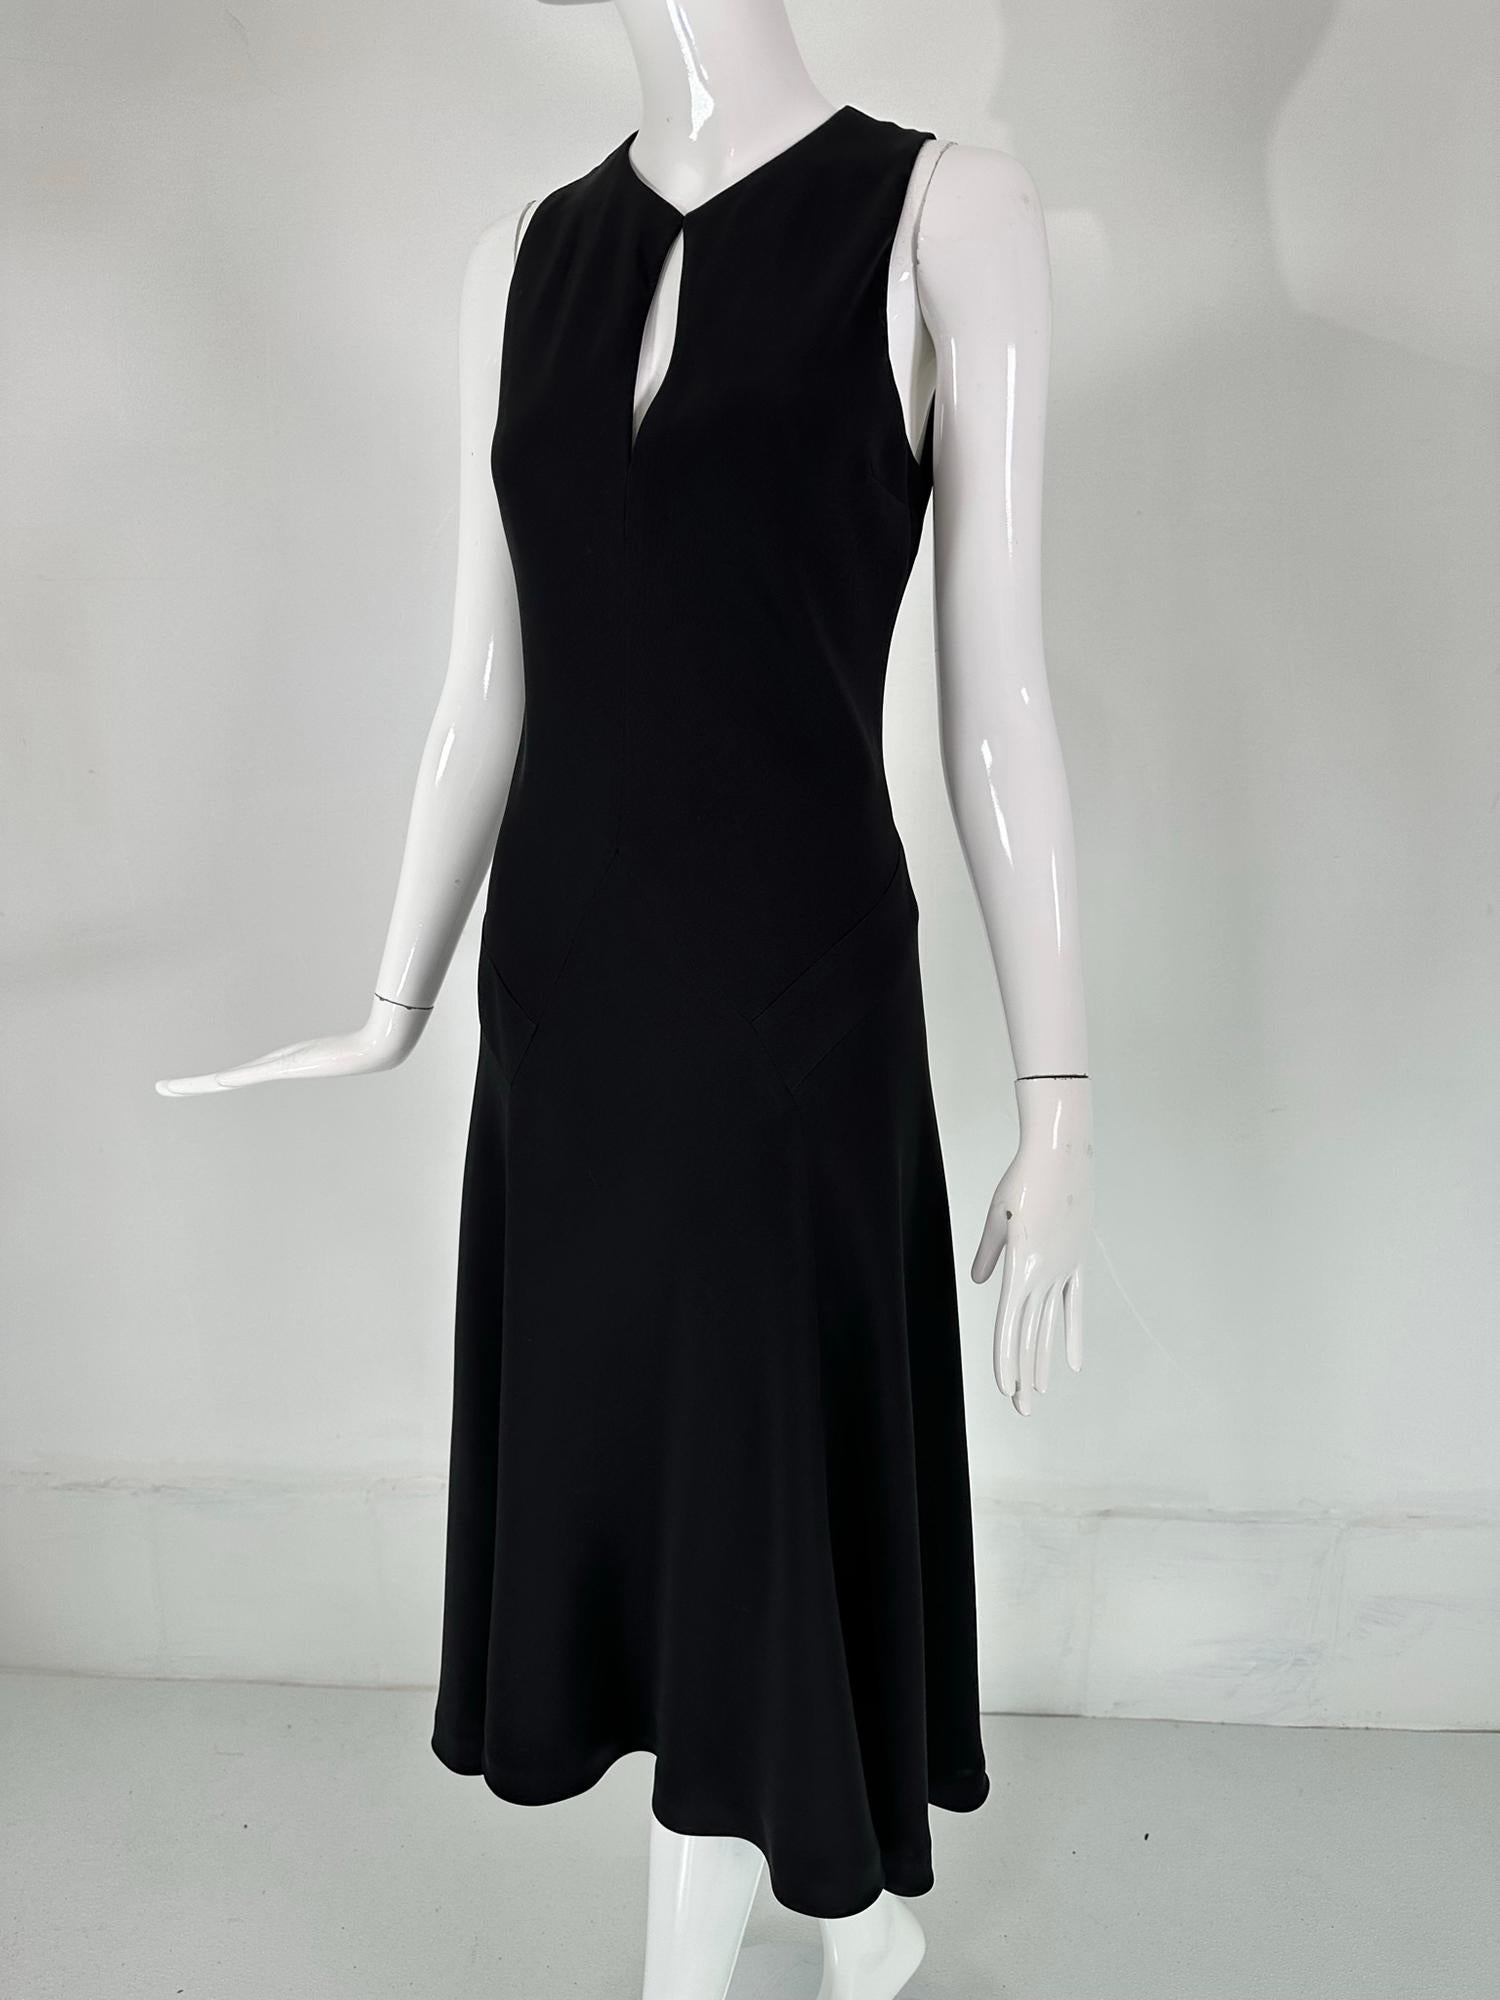 Ralph Lauren Black Label Classic Silk Bias Cut Dress 8 For Sale 7